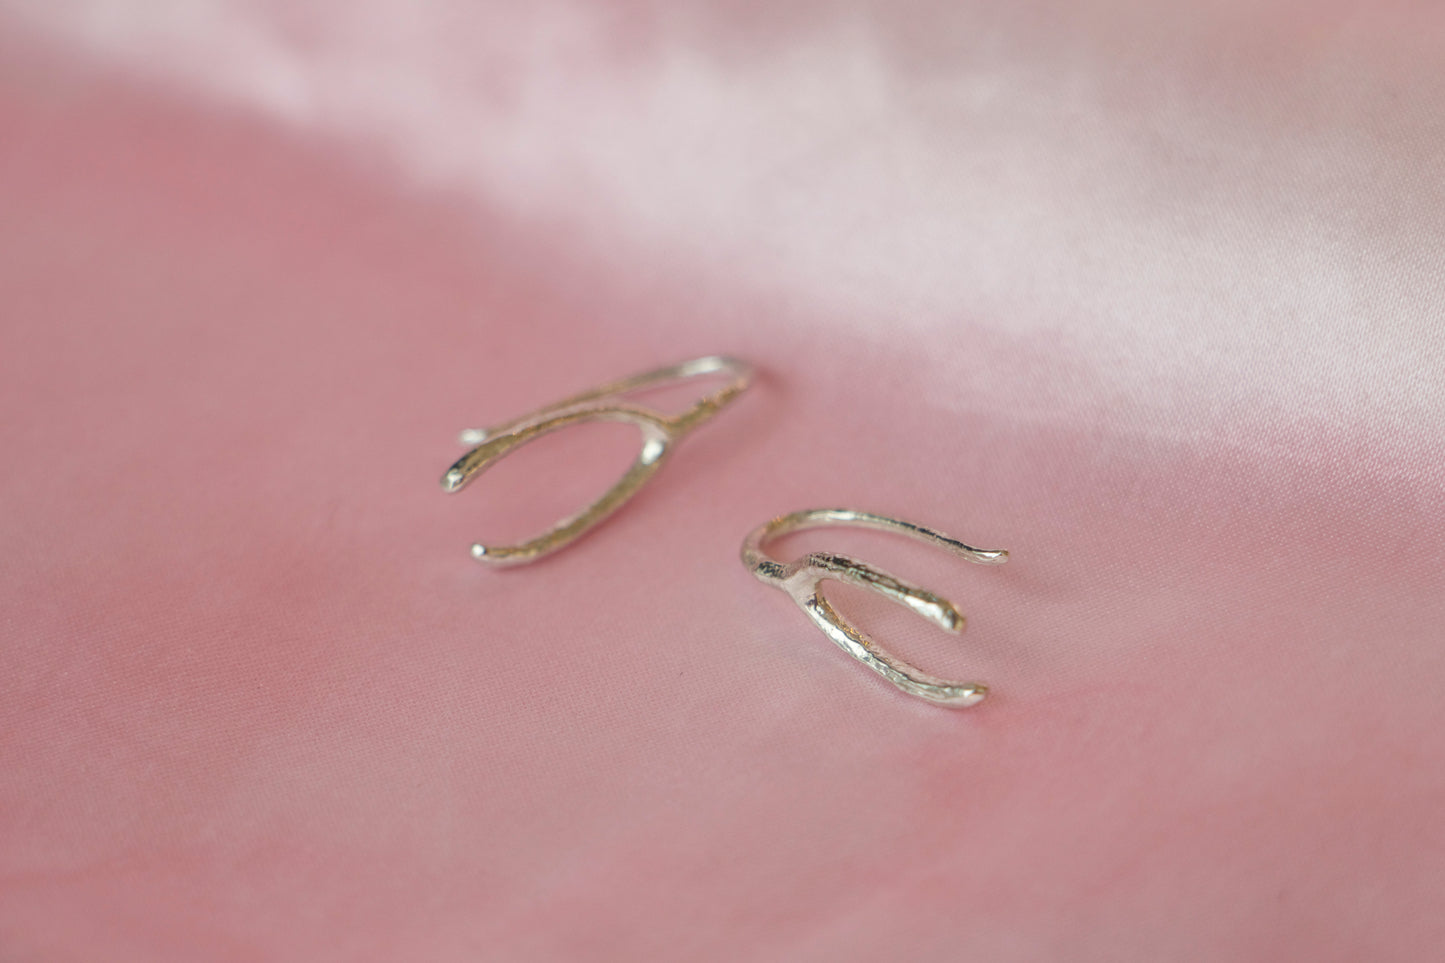 SAMPLE Wishbone Earrings - Silver and Gold Vermeil